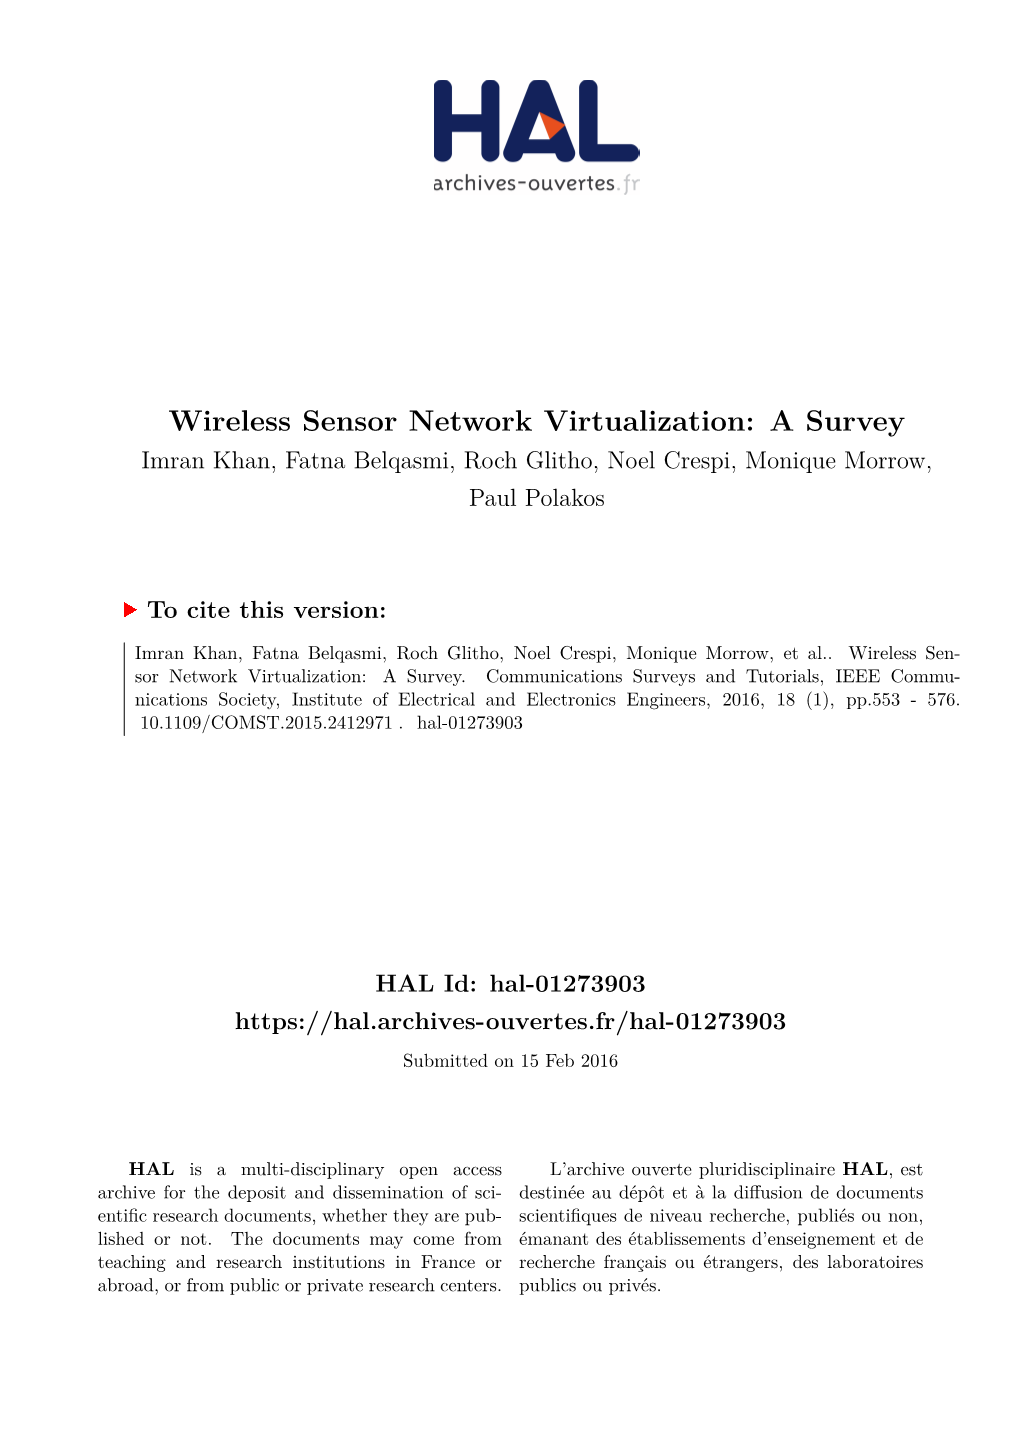 Wireless Sensor Network Virtualization: a Survey Imran Khan, Fatna Belqasmi, Roch Glitho, Noel Crespi, Monique Morrow, Paul Polakos